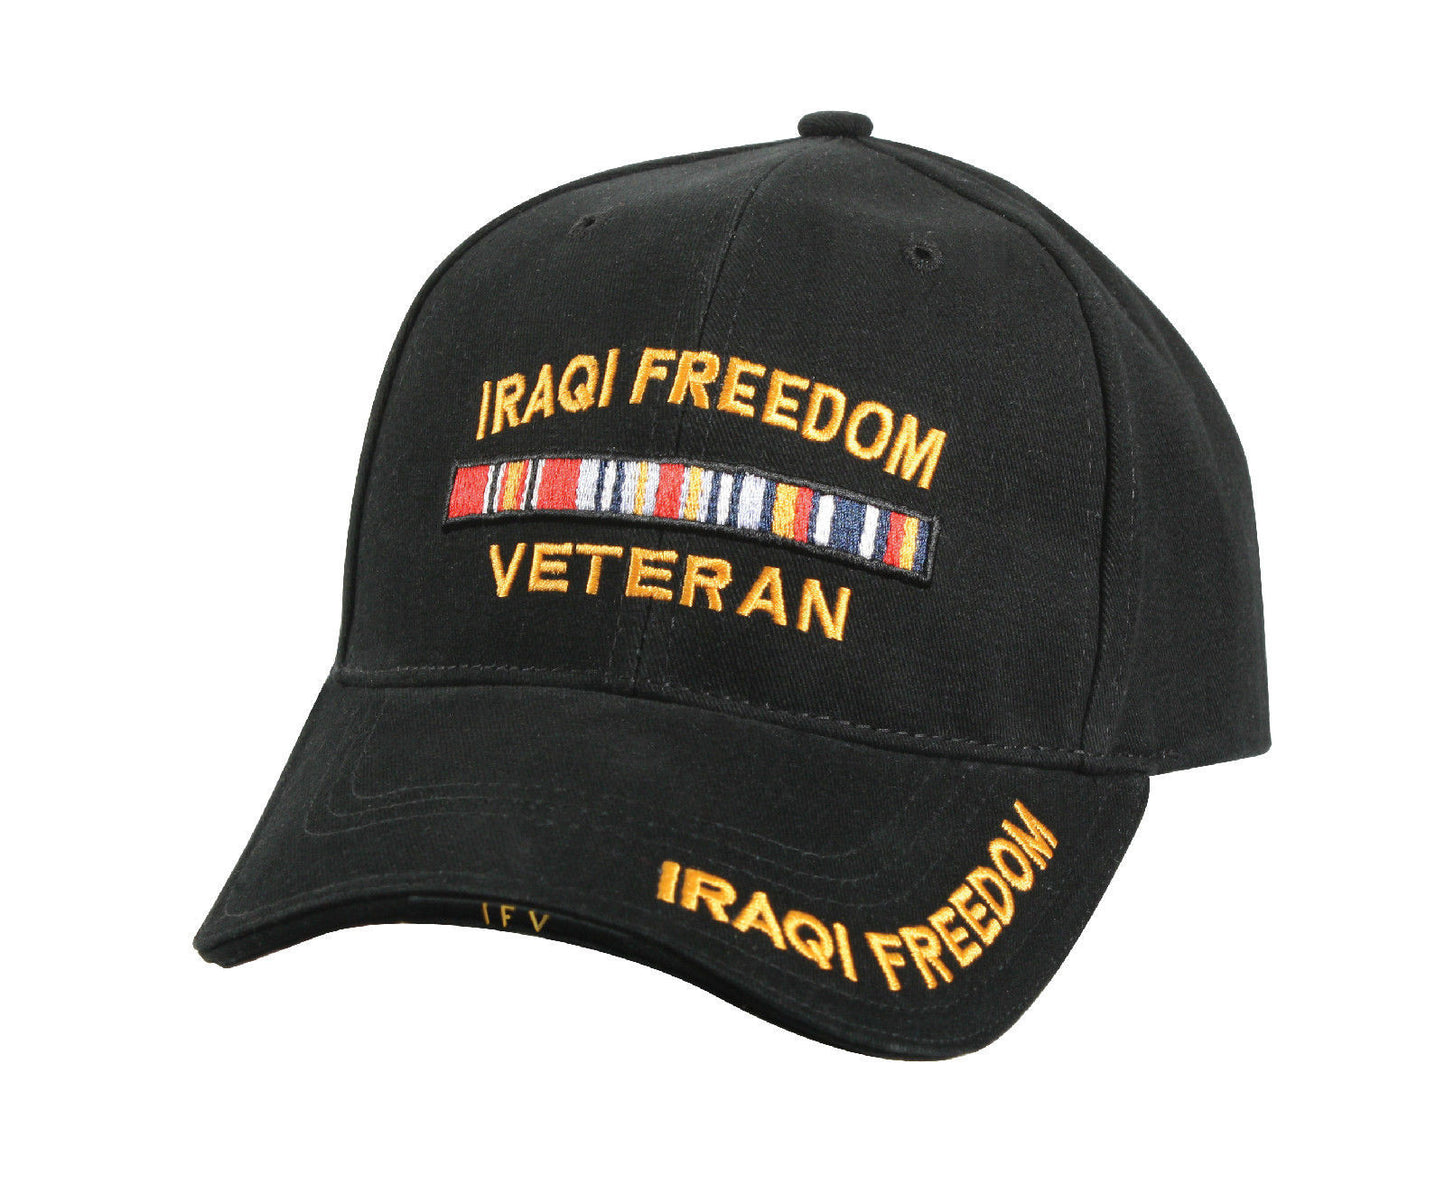 Iraqi Freedom Veteran